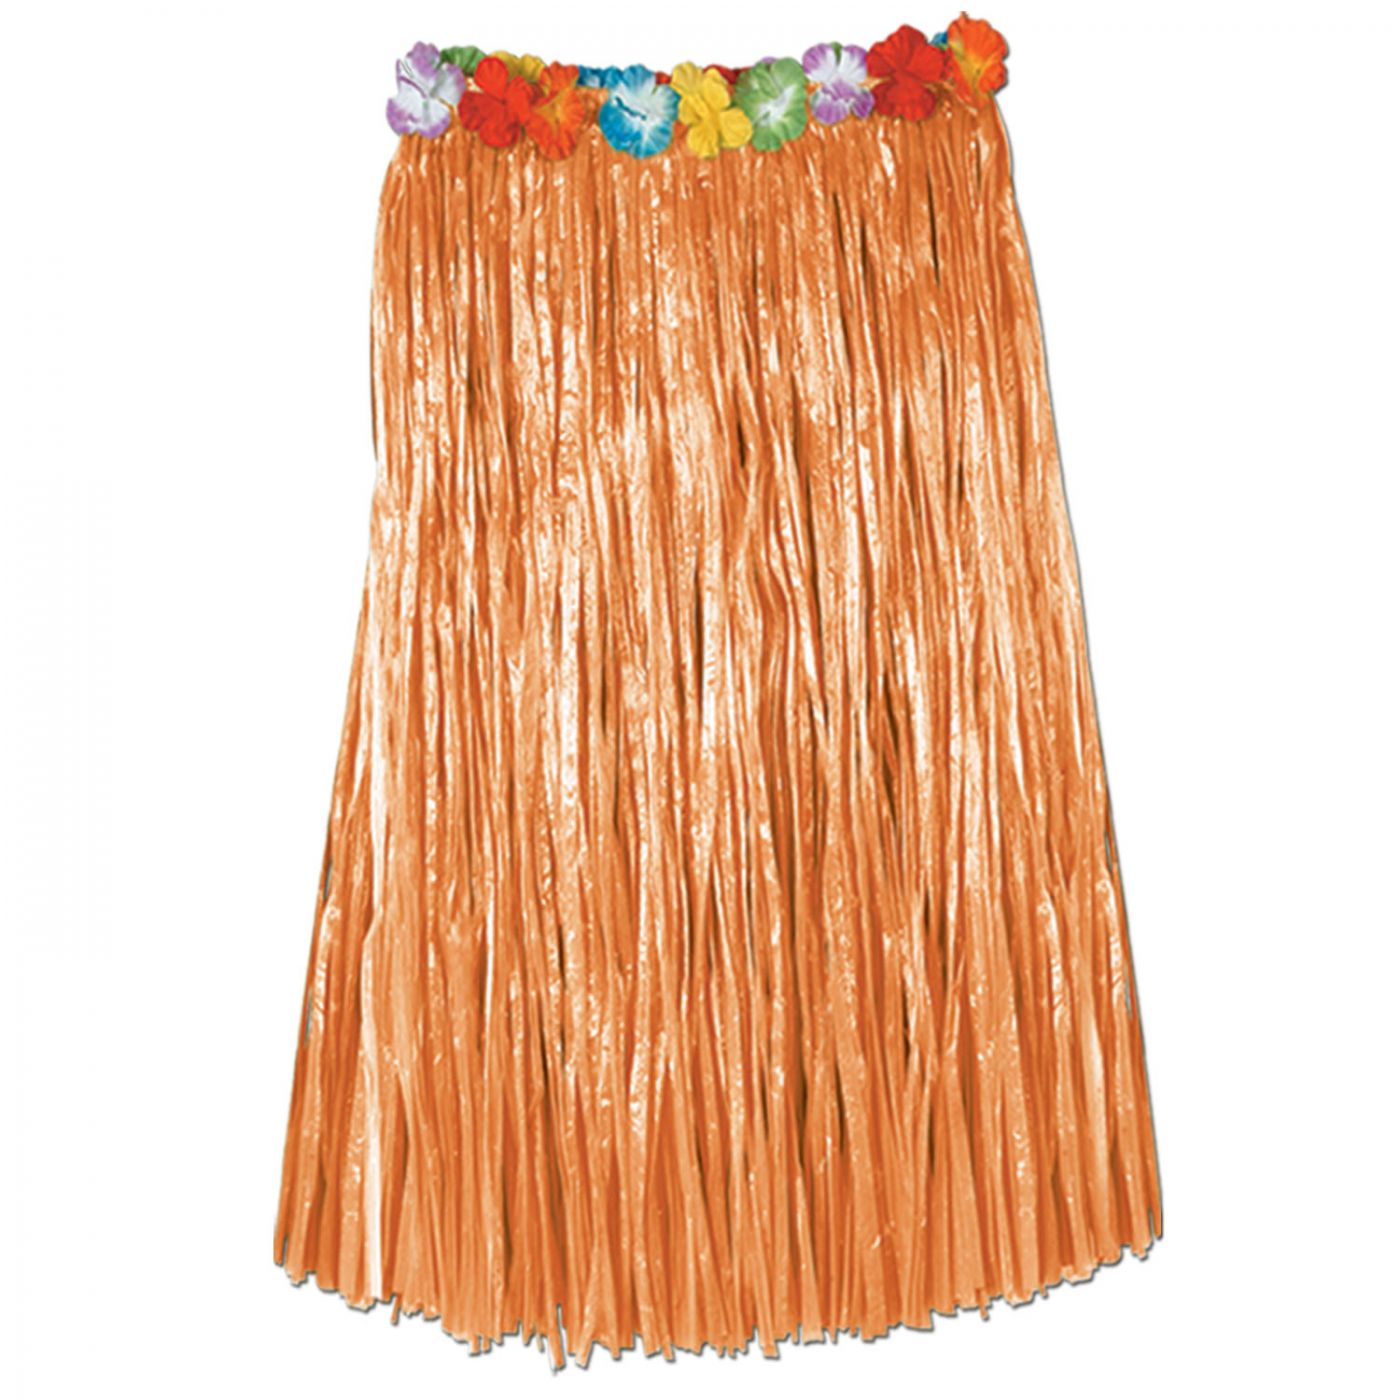 Image of Adult Artificial Grass Hula Skirt (12)